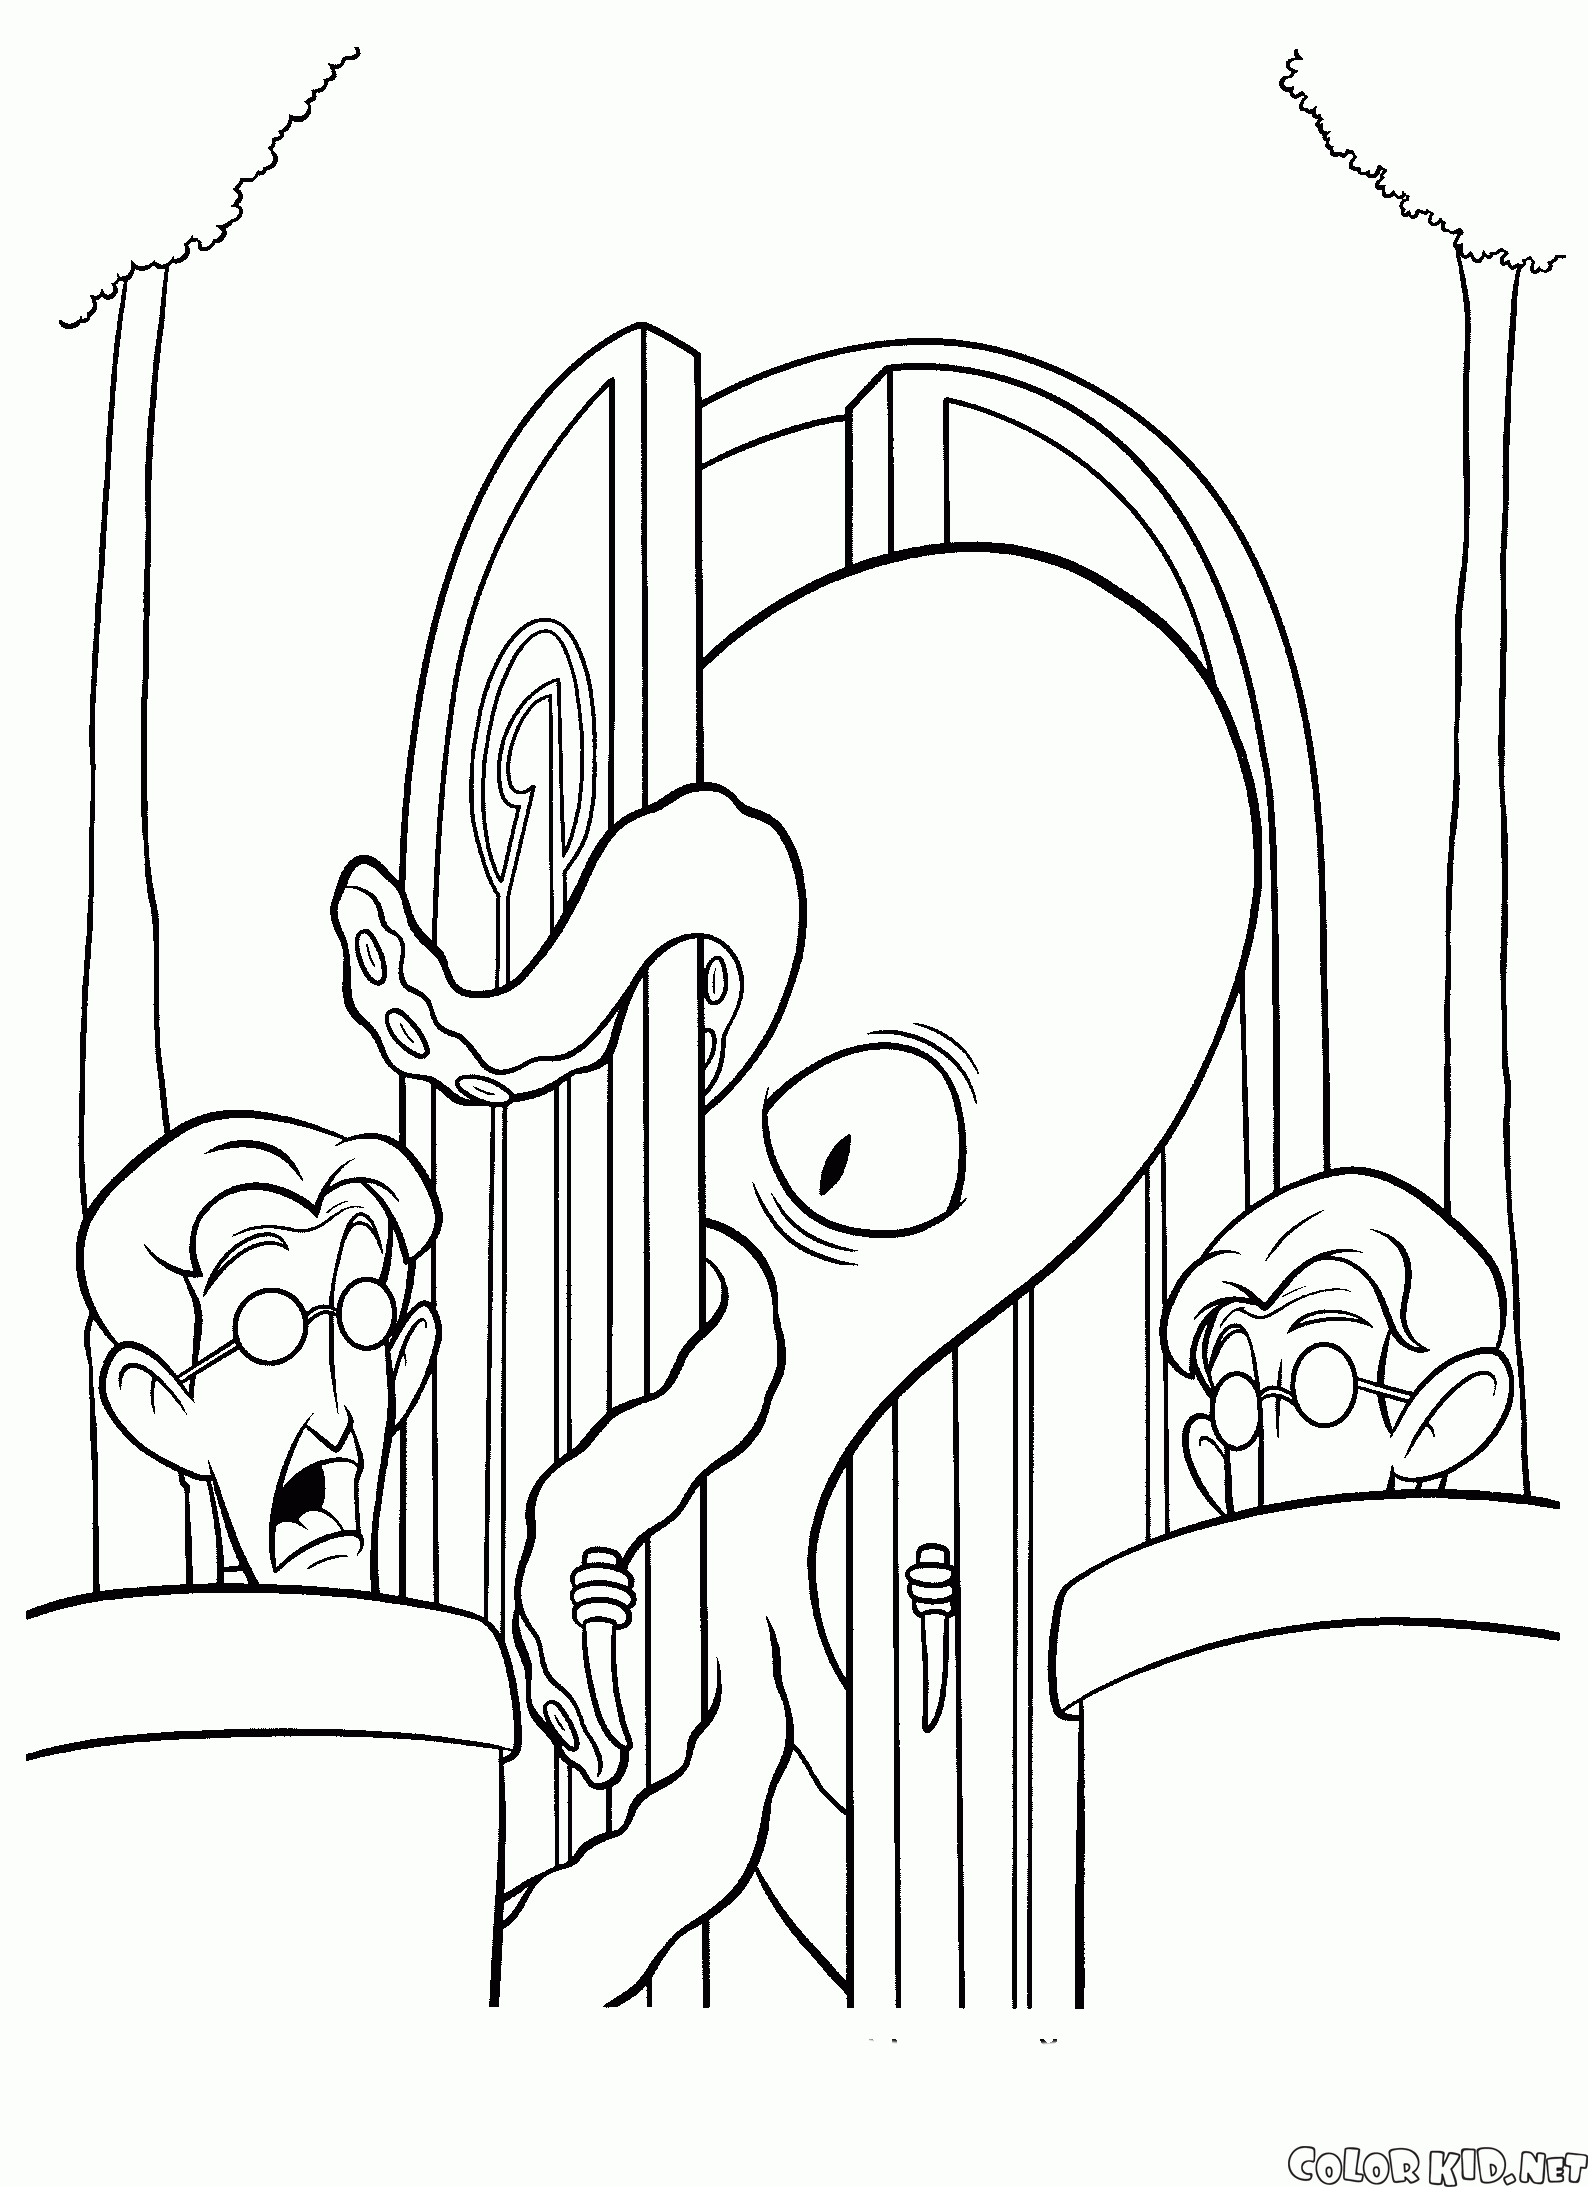 Octopus à lexposition